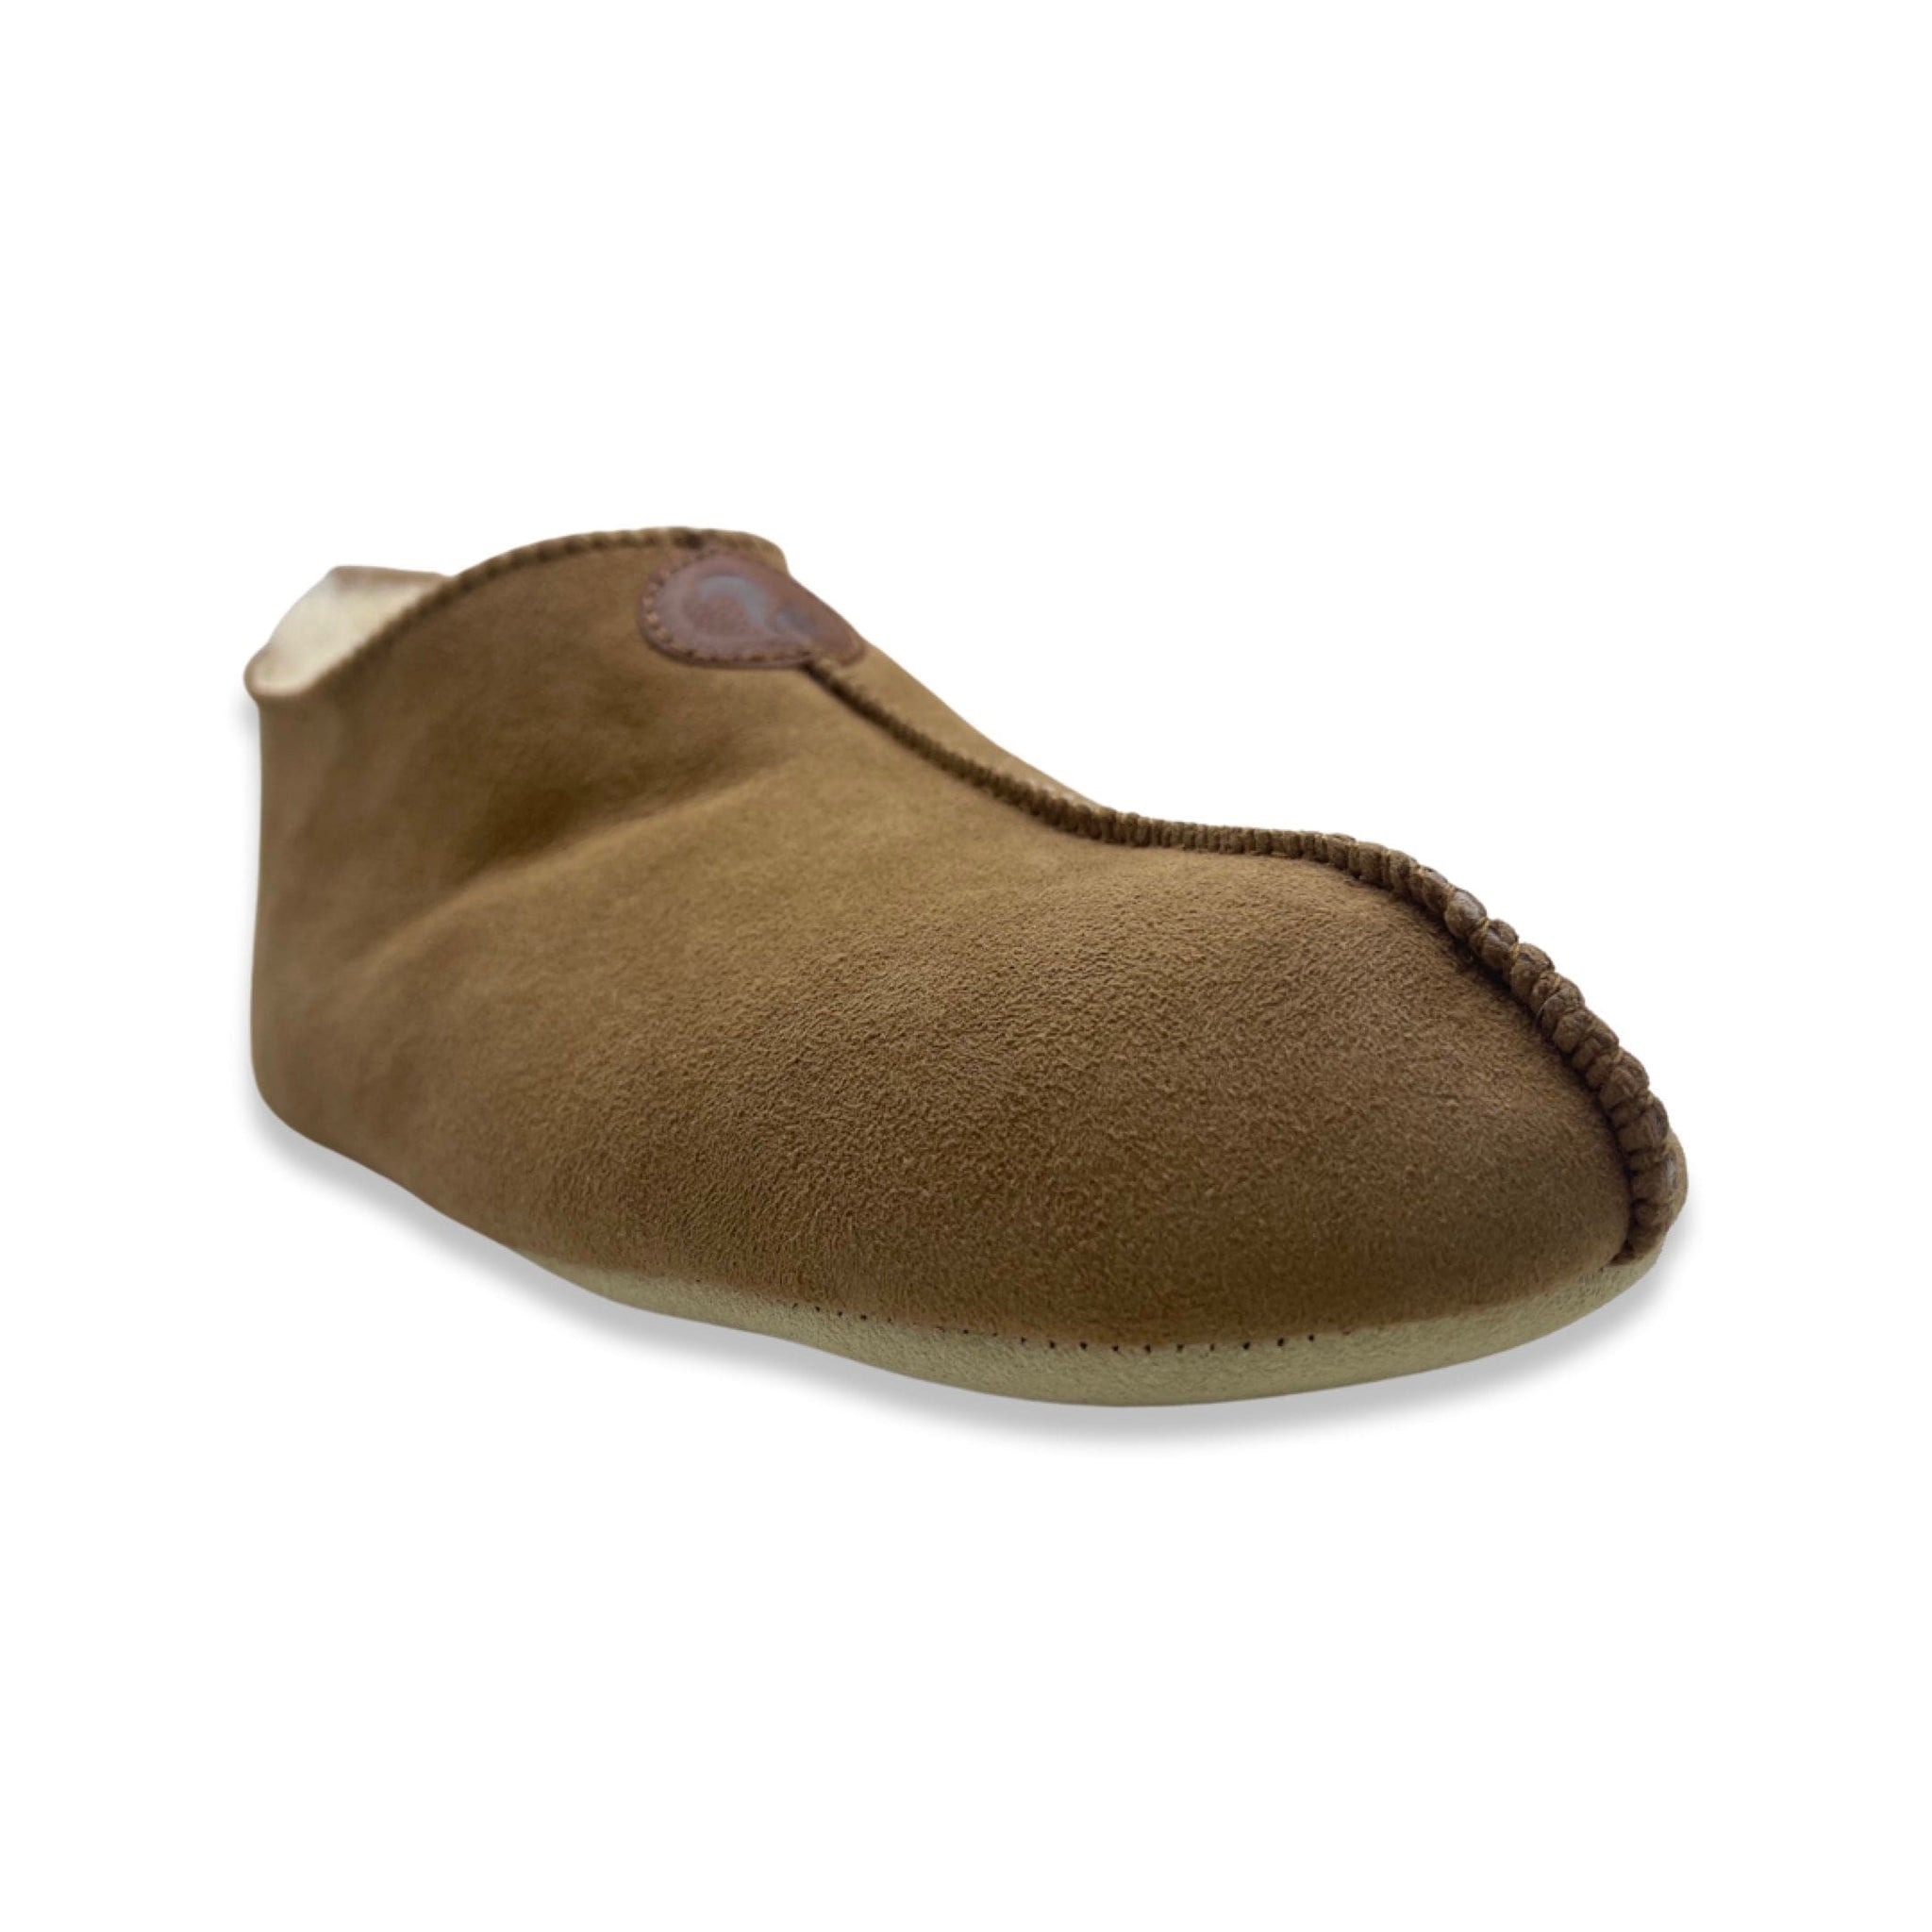 NAT 2 fodtøj thies 1856 ® Sheep Slipper Boot cashew (W) bæredygtig mode etisk mode